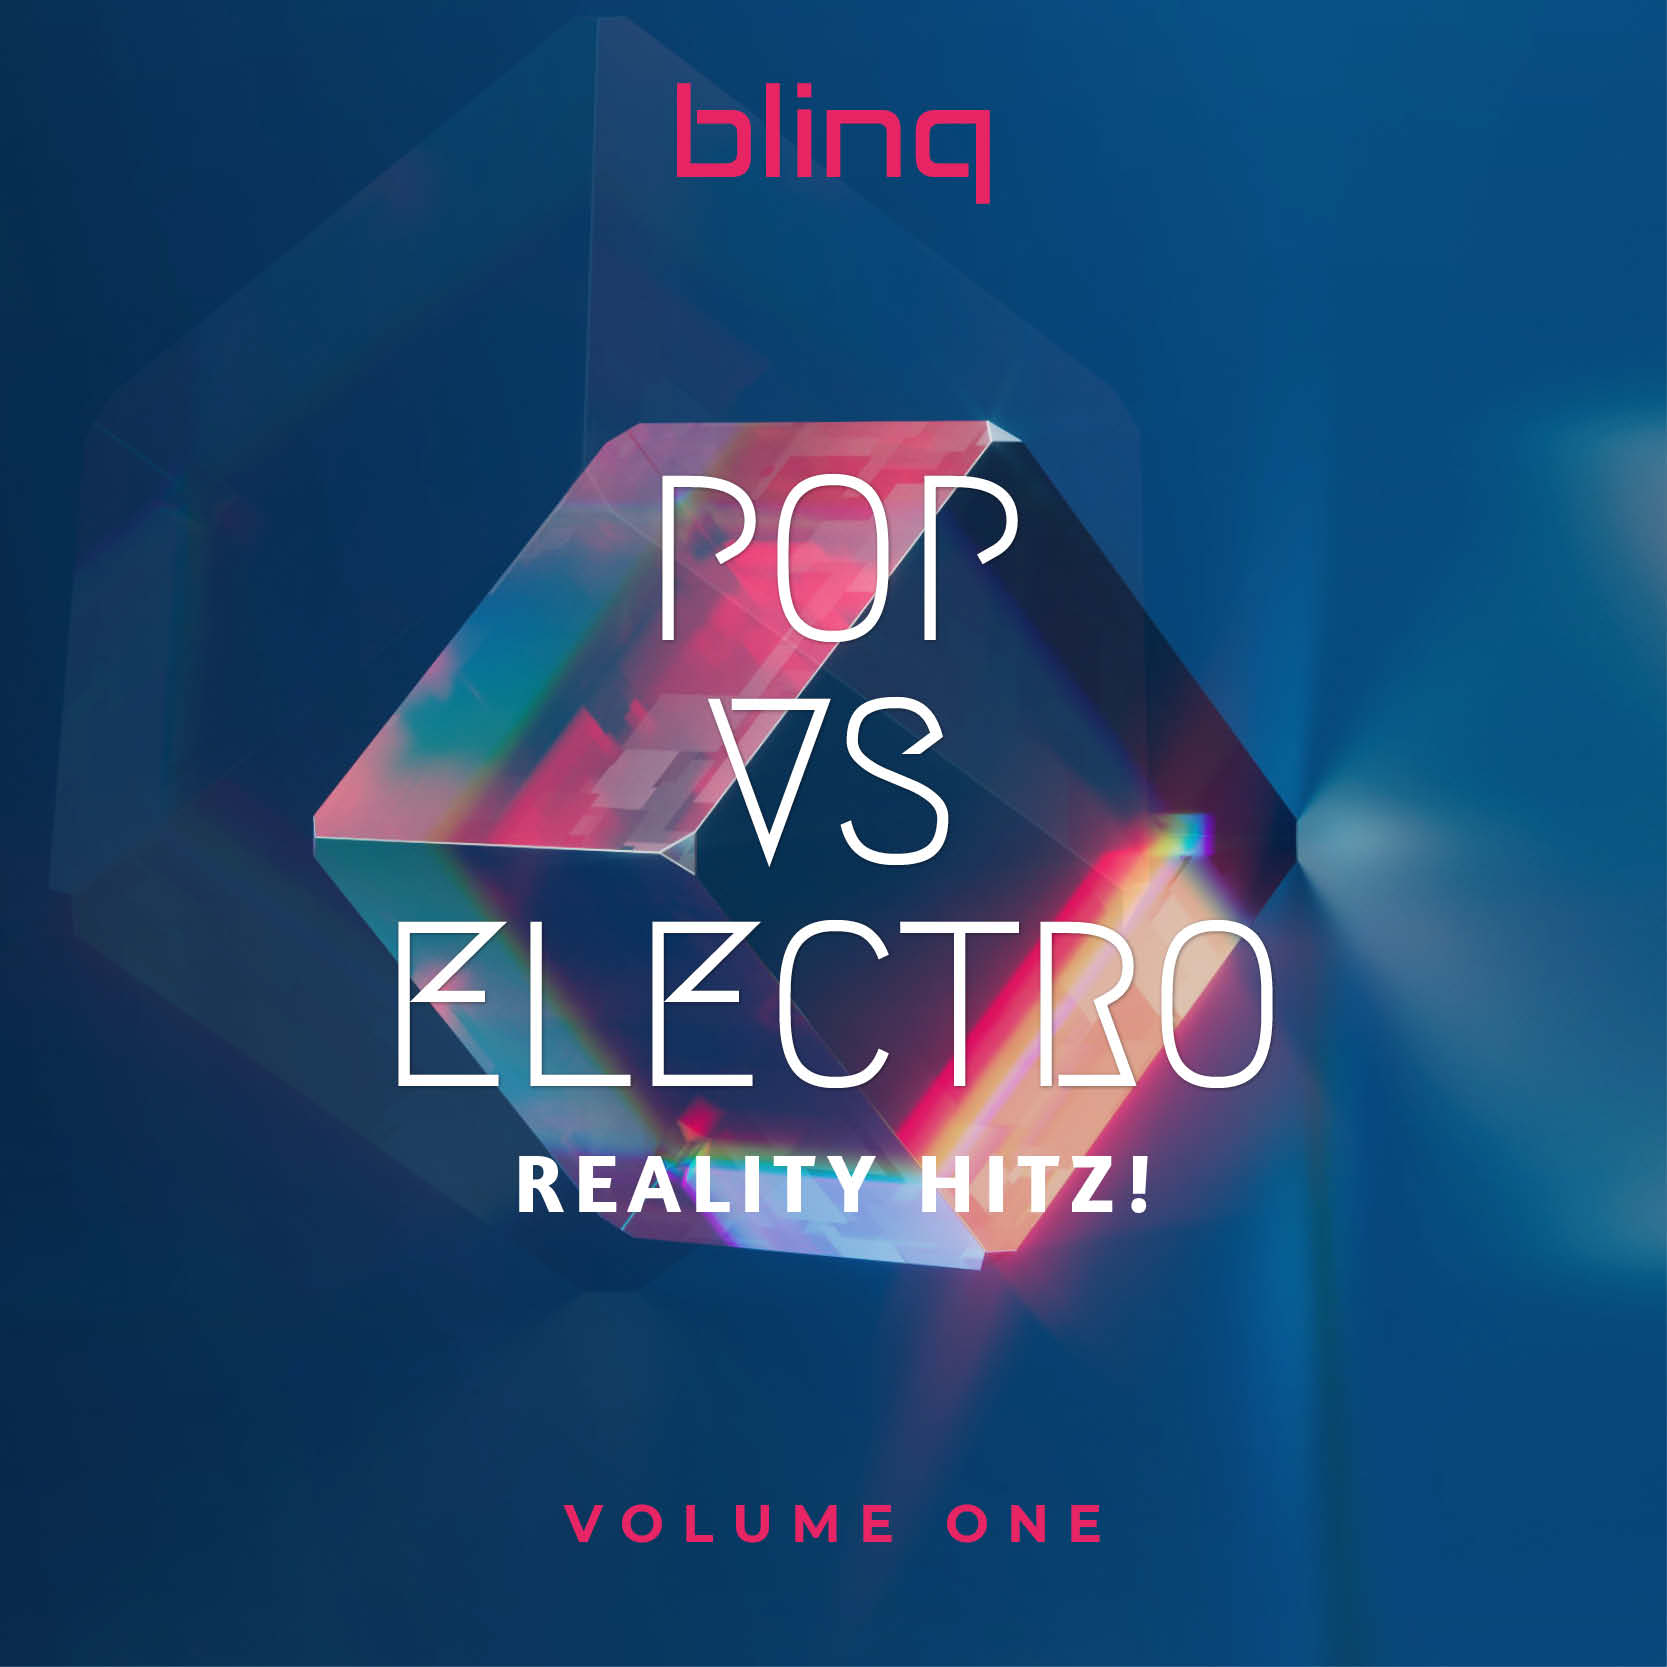 Pop vs Electro